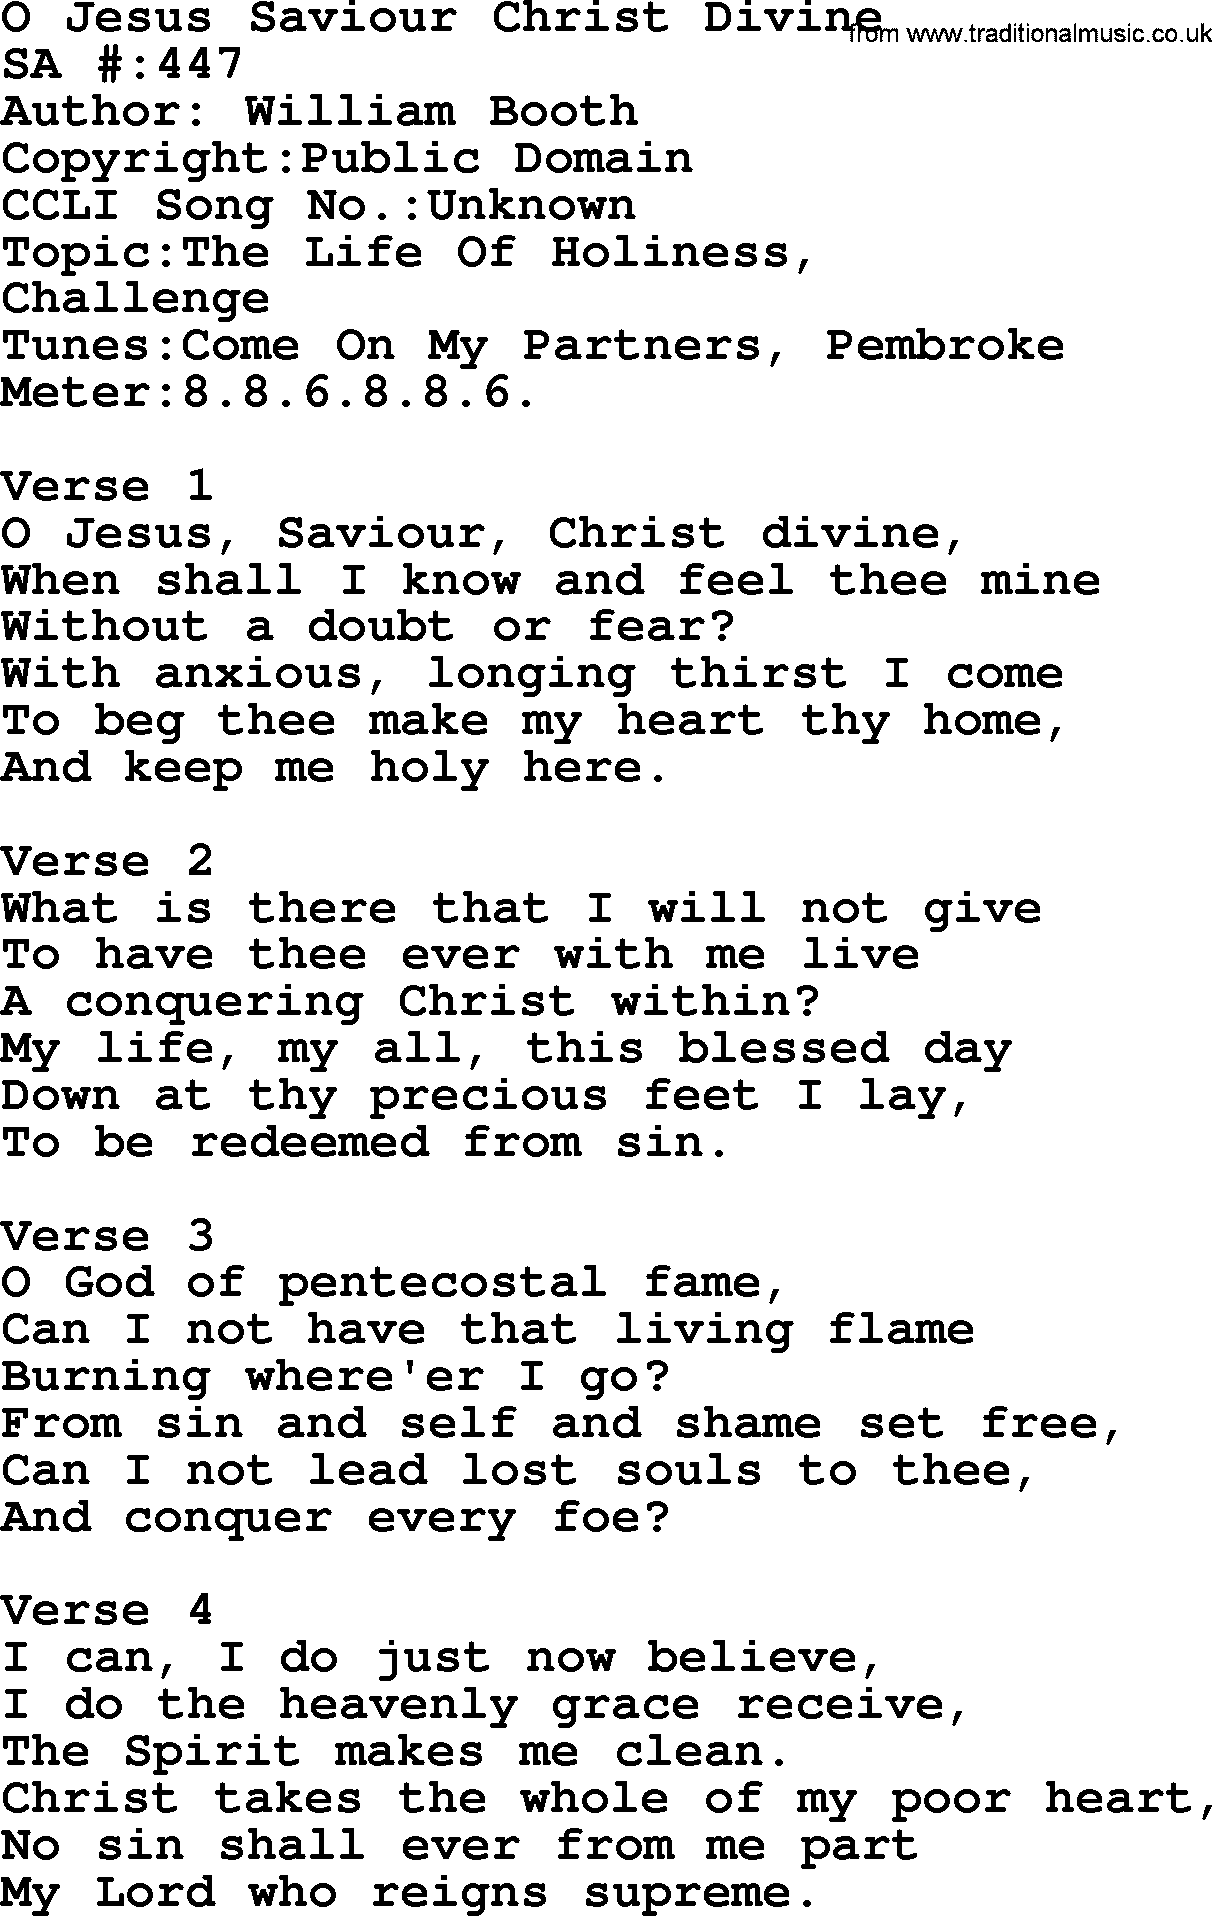 Salvation Army Hymnal, title: O Jesus Saviour Christ Divine, with lyrics and PDF,